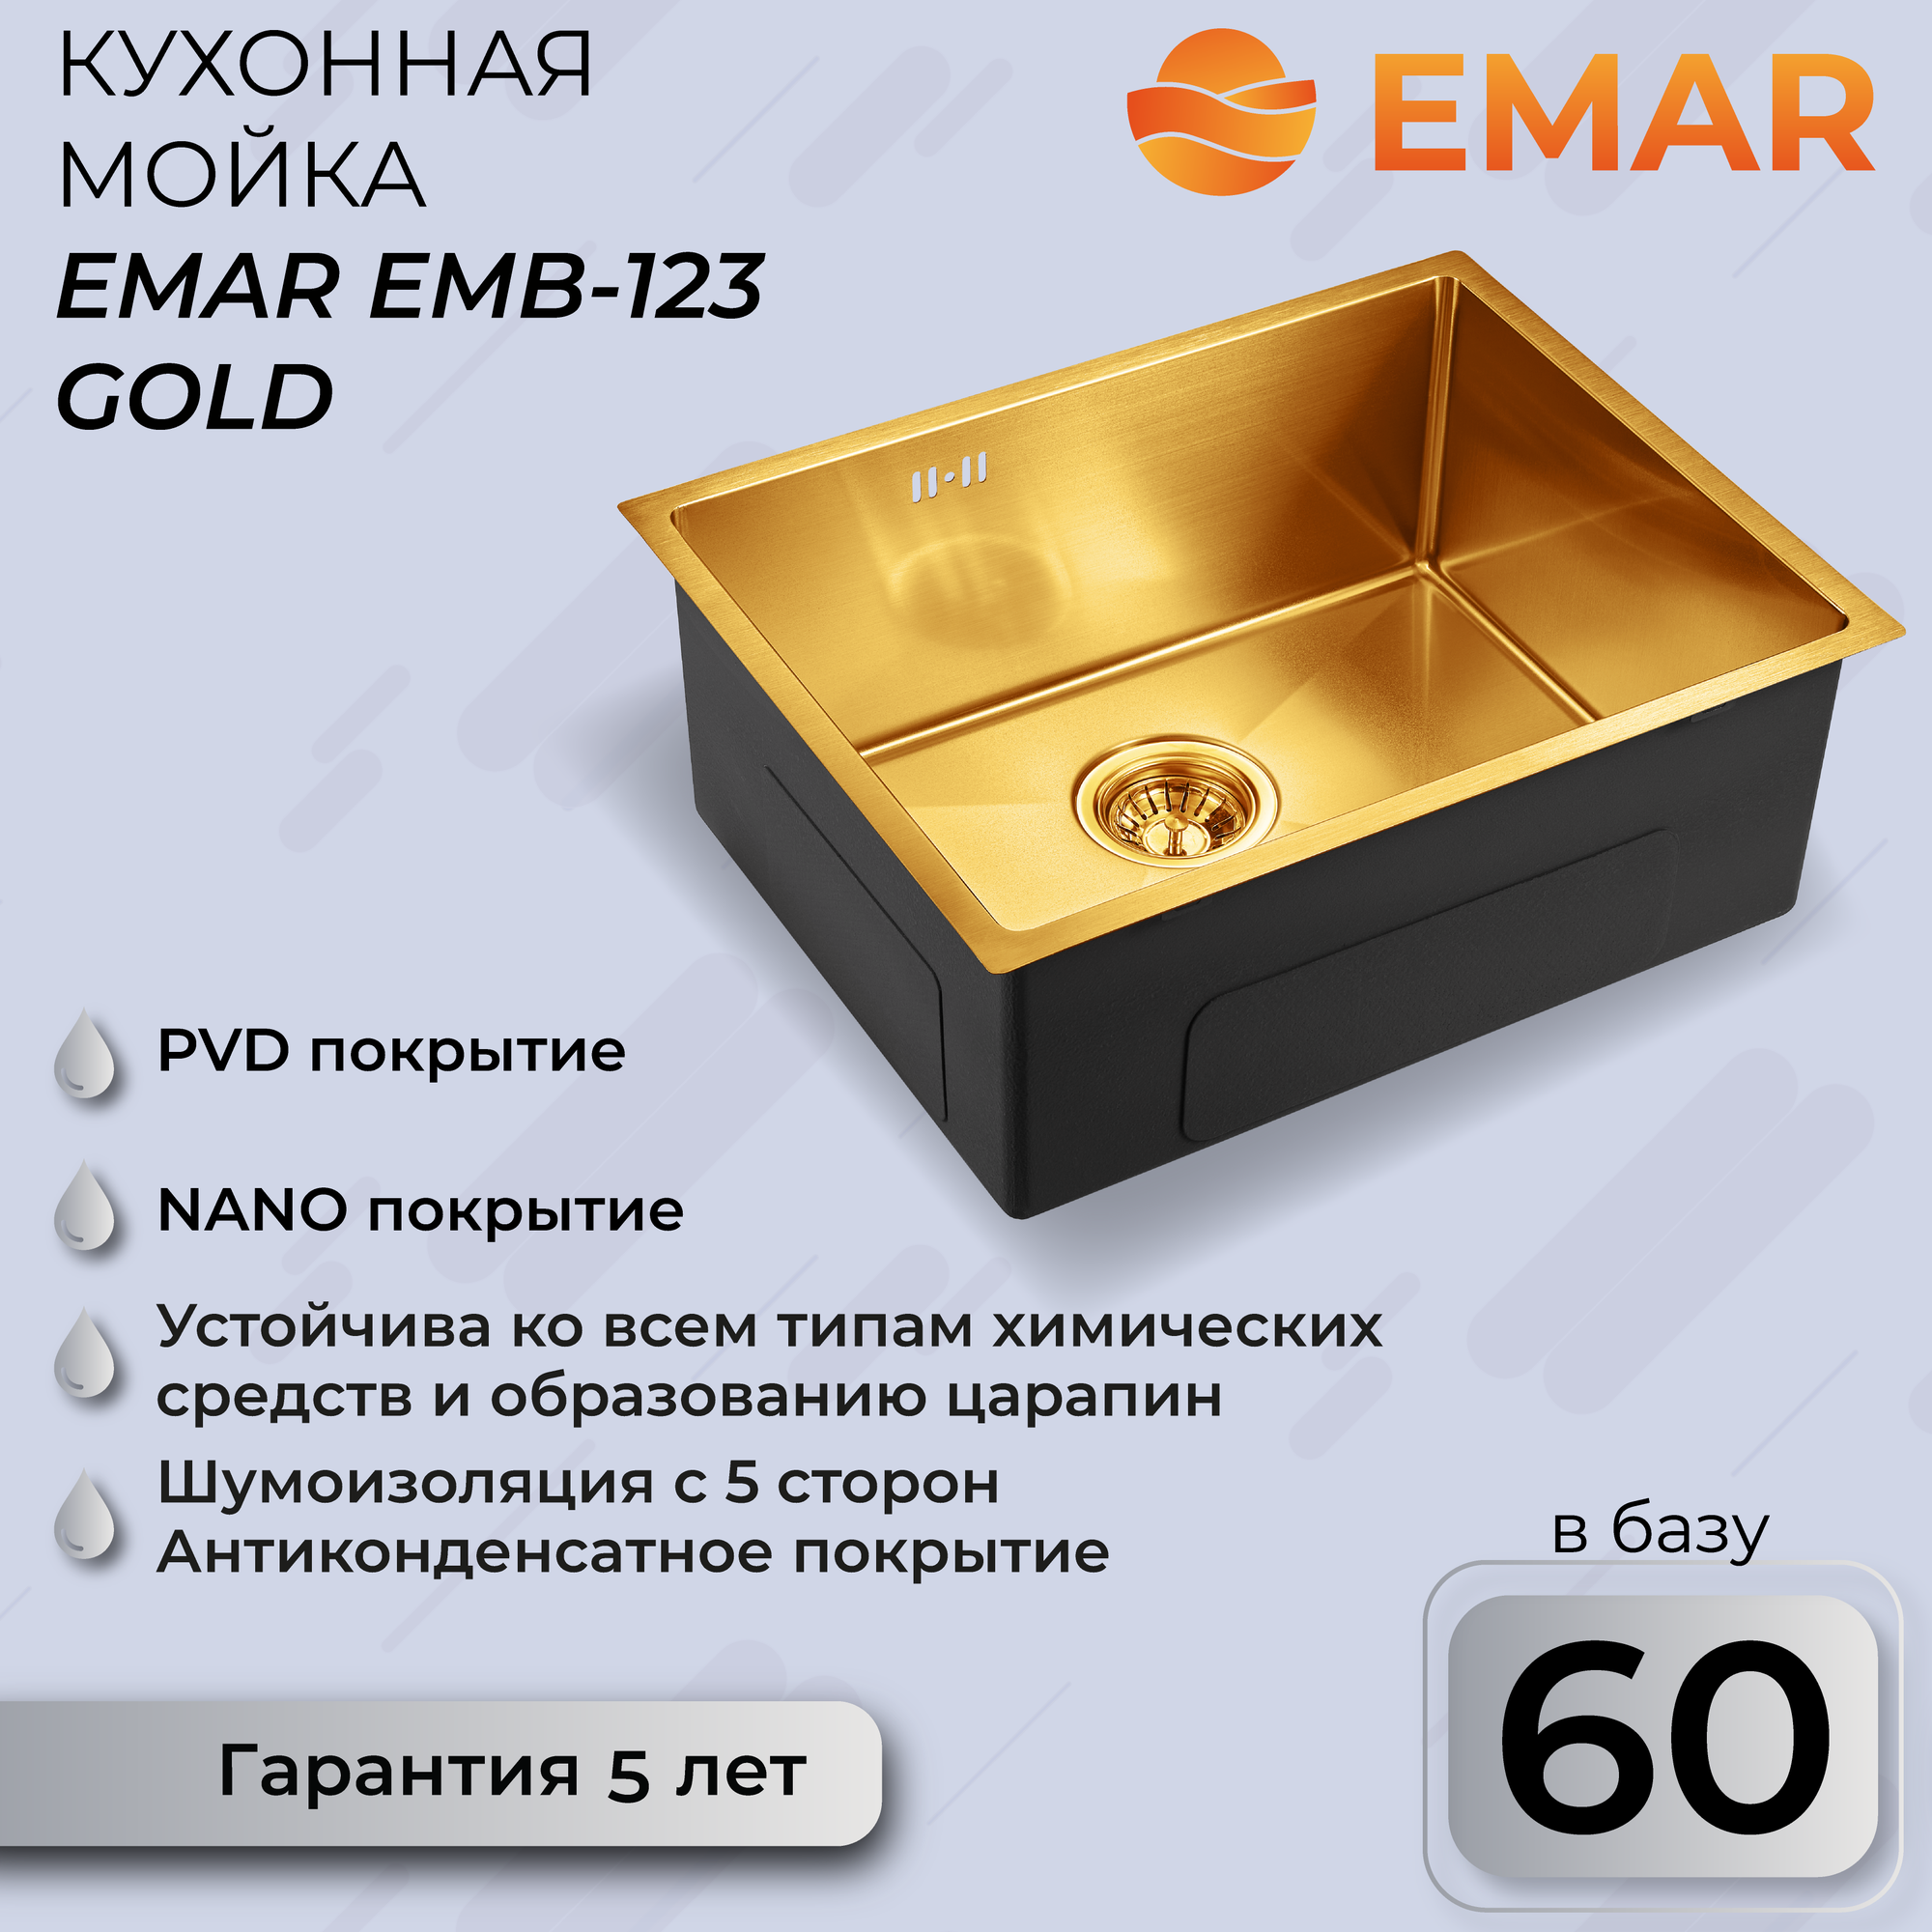 Кухонная мойка EMAR EMB-123 PVD Nano Golden